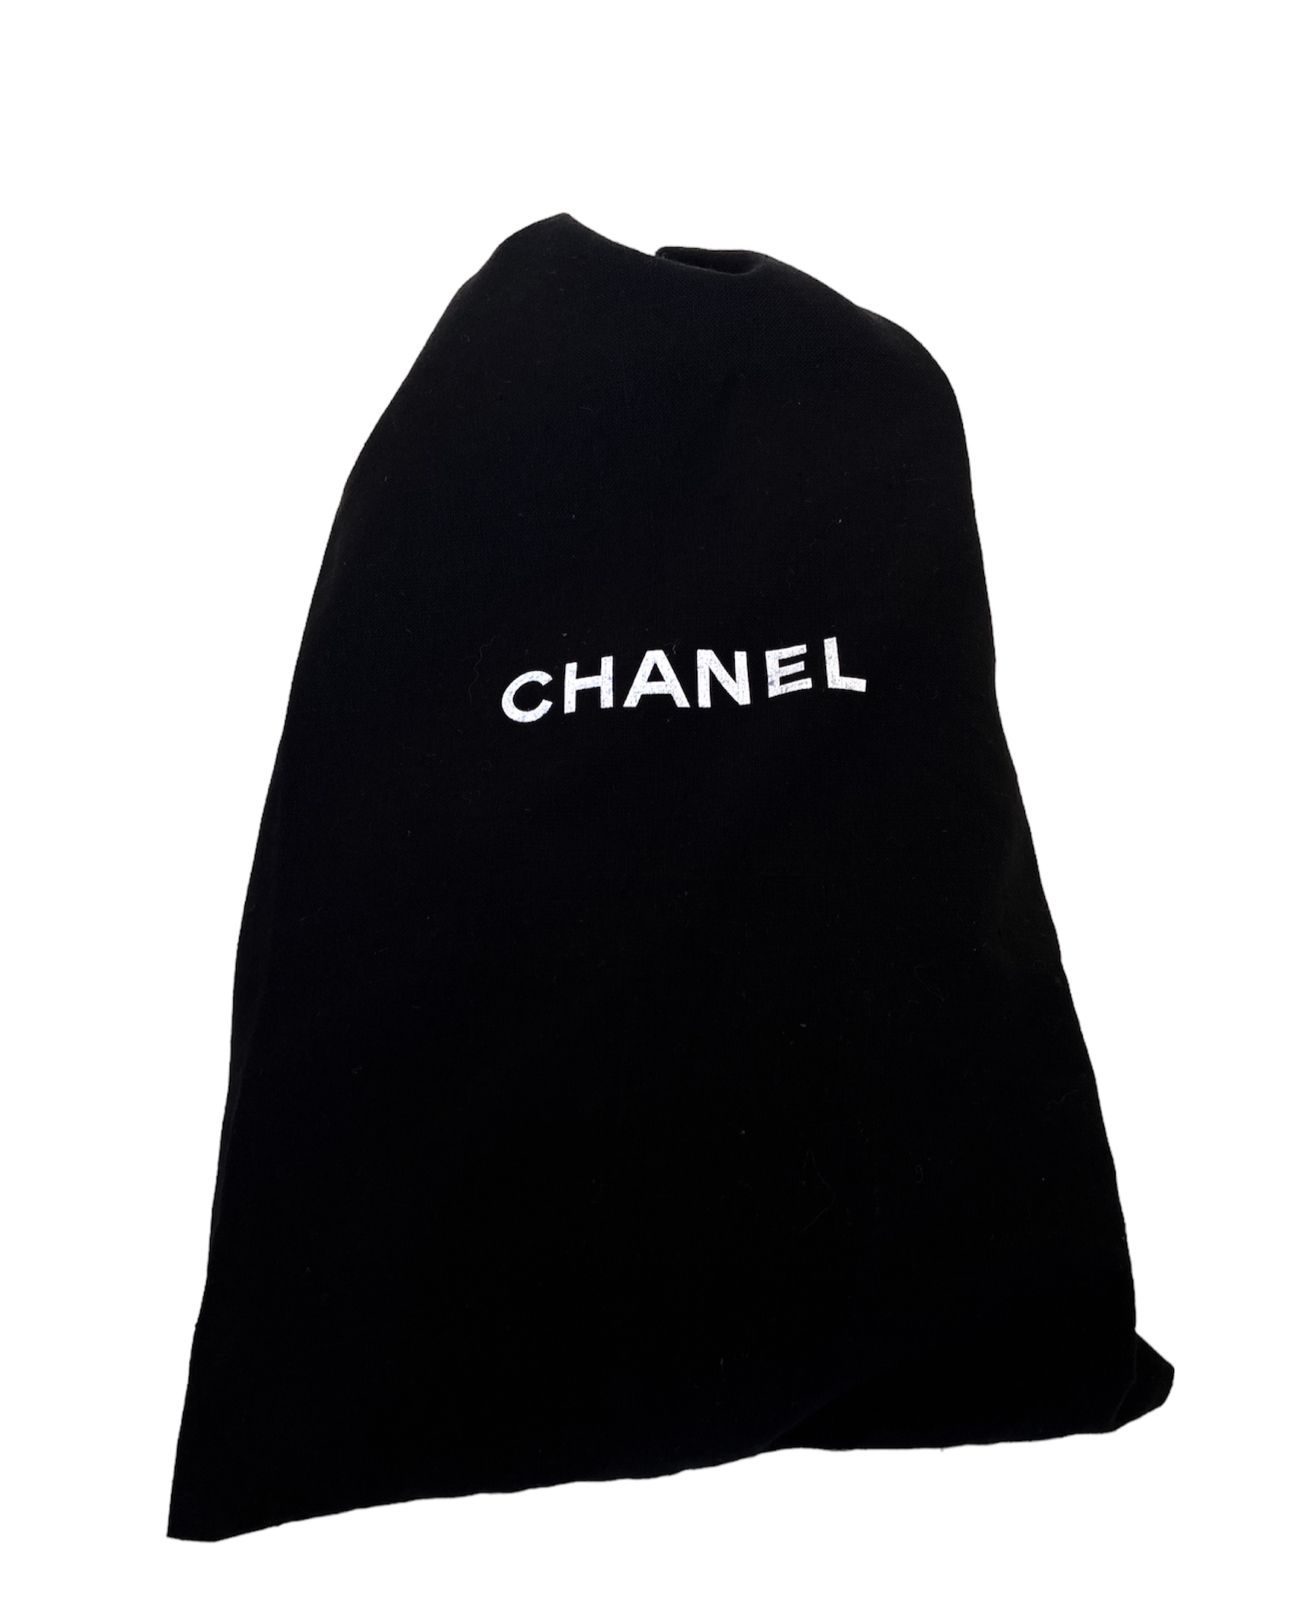 Sapatilha Chanel Vermela Sola 36 1/2 Europa com Dustbag